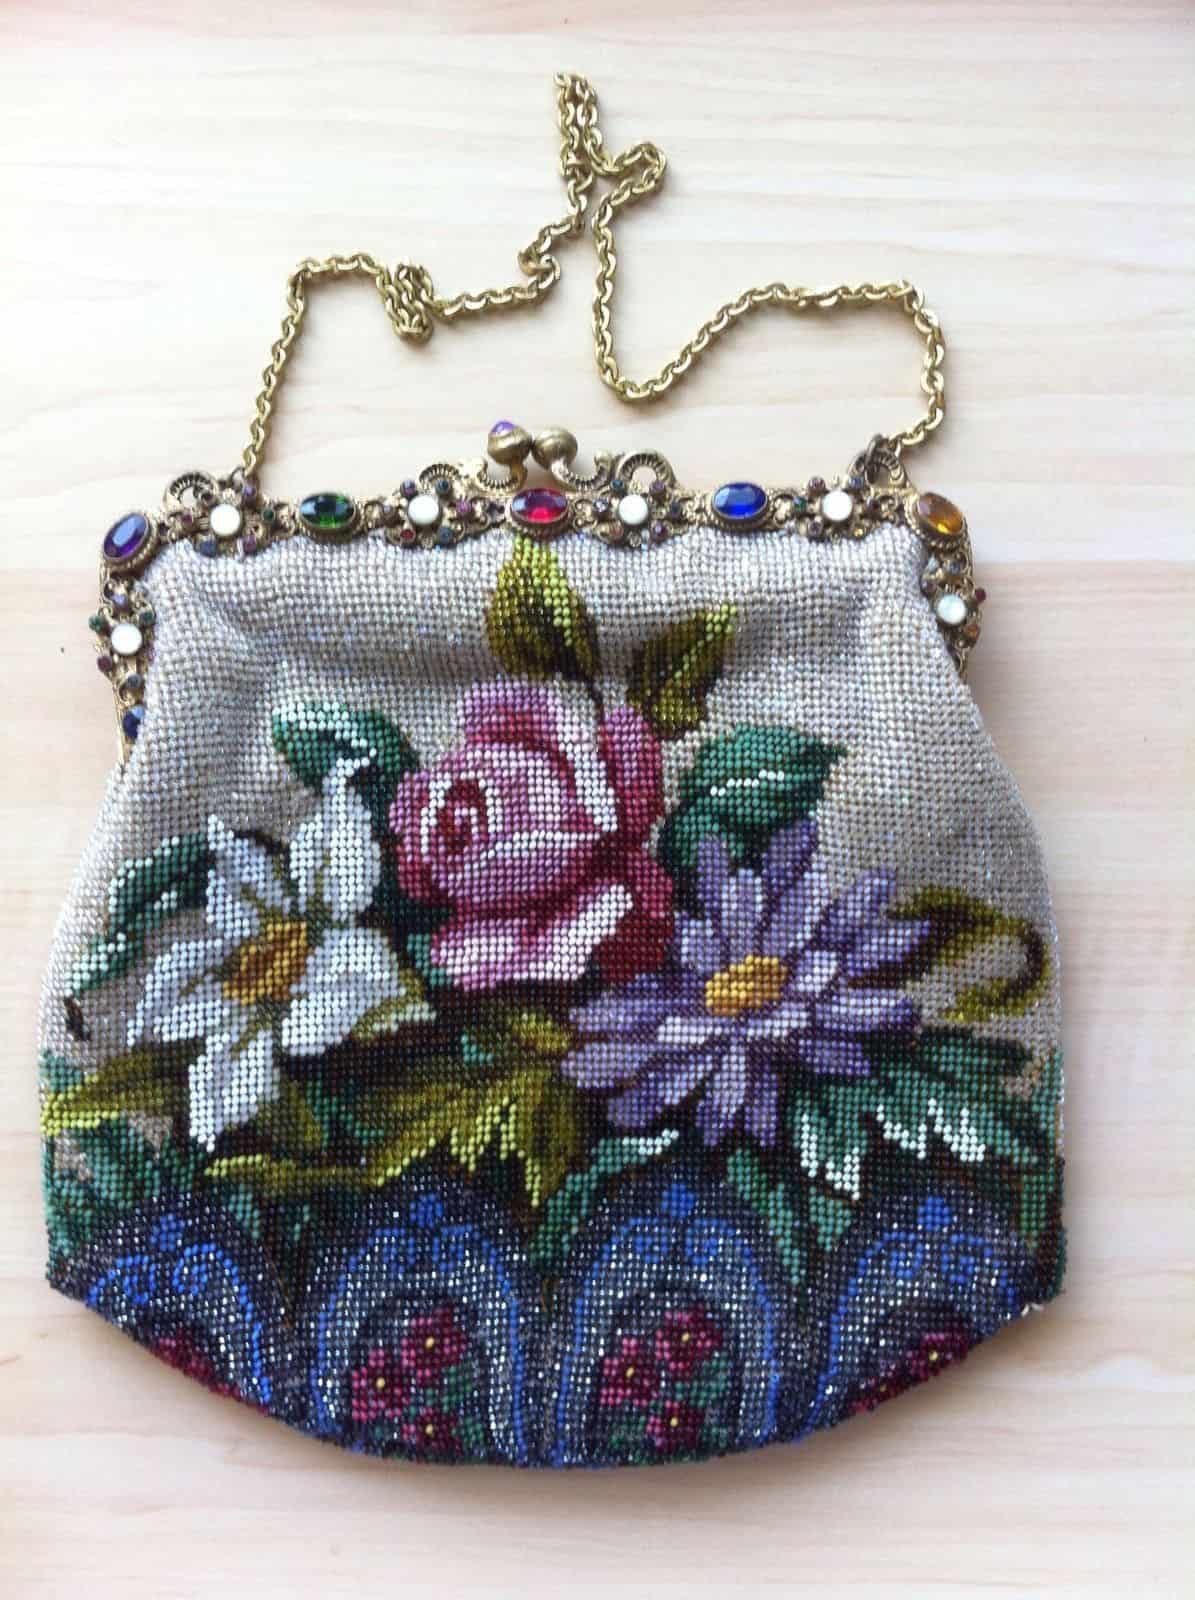 Micro-beaded purses